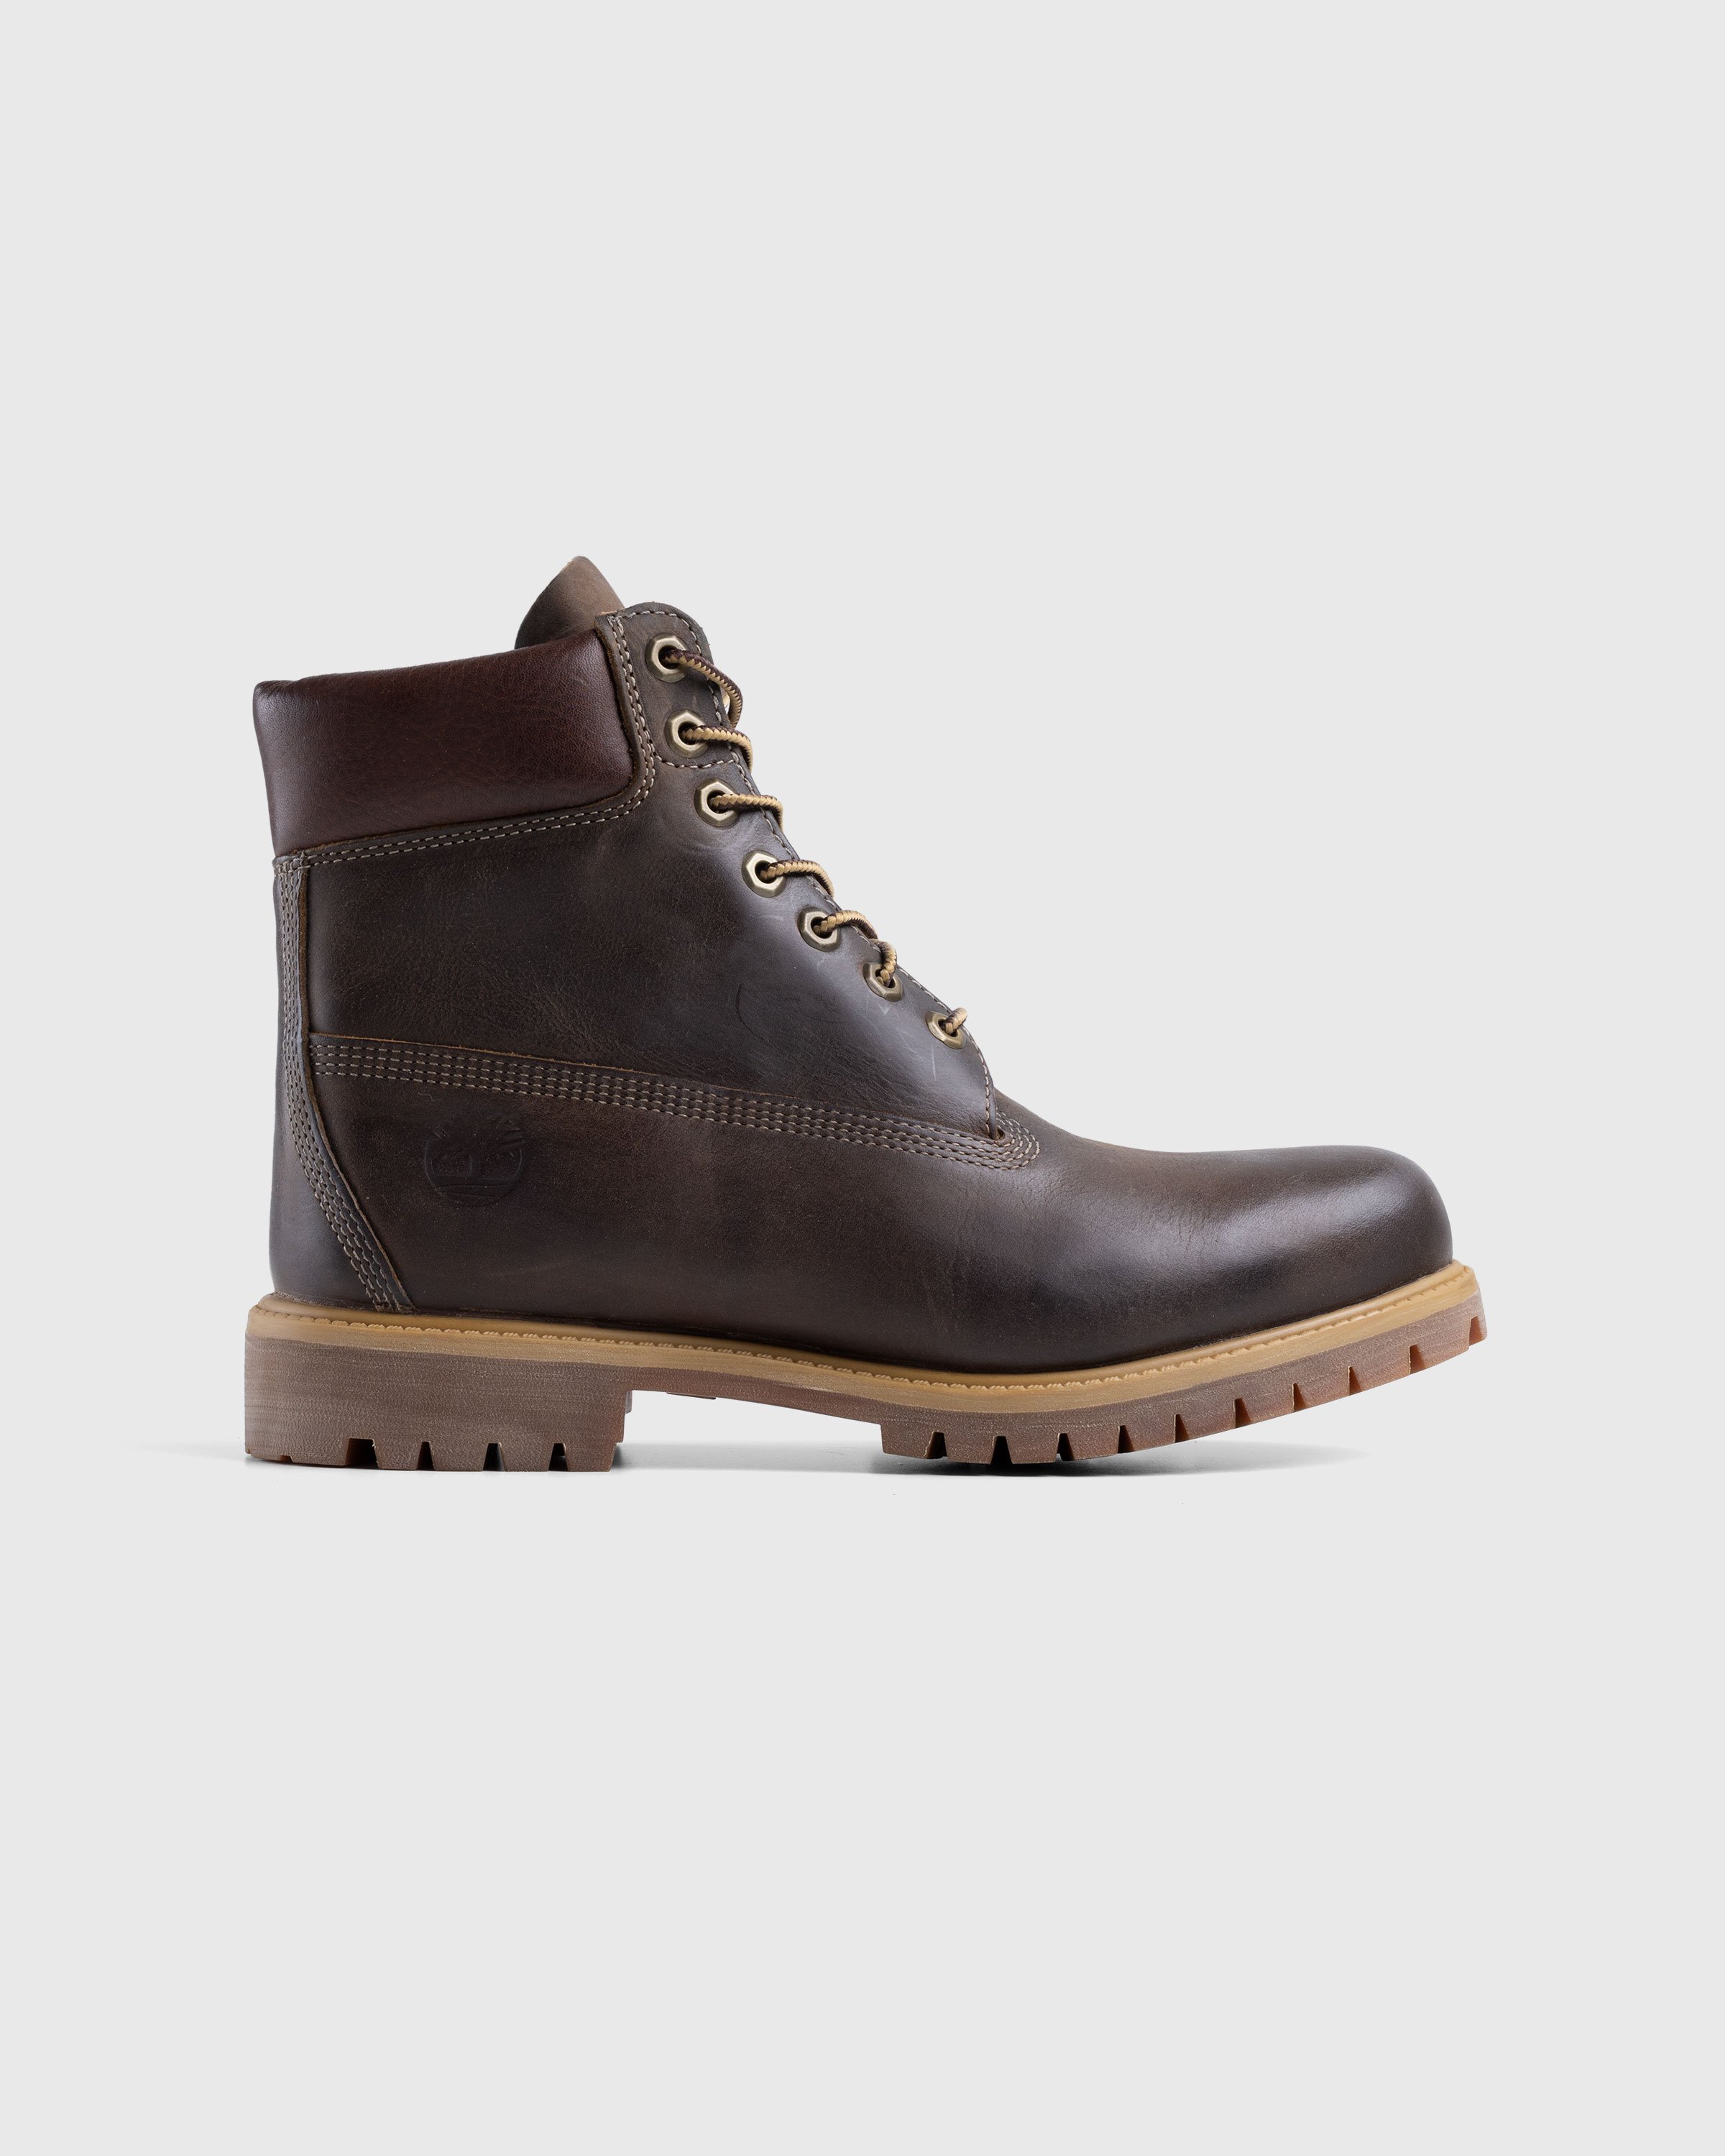 Timberland - Heritage 6 in Premium Brown - Footwear - Brown - Image 1